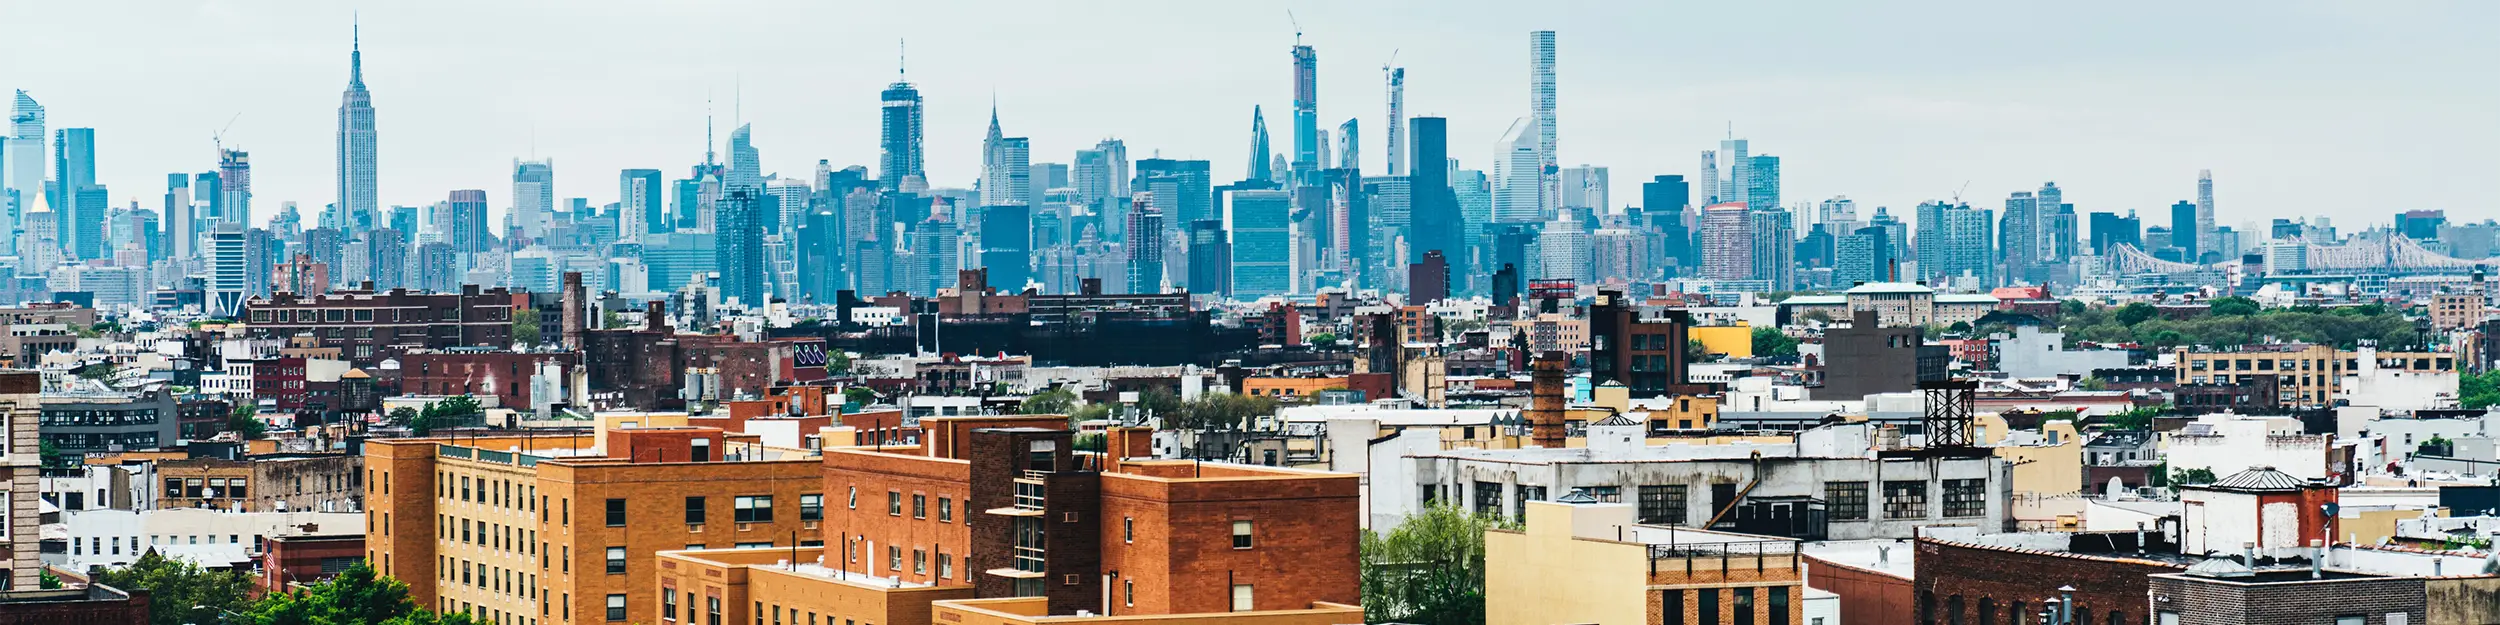 Bushwick Brooklyn aerial view with Manhattan background